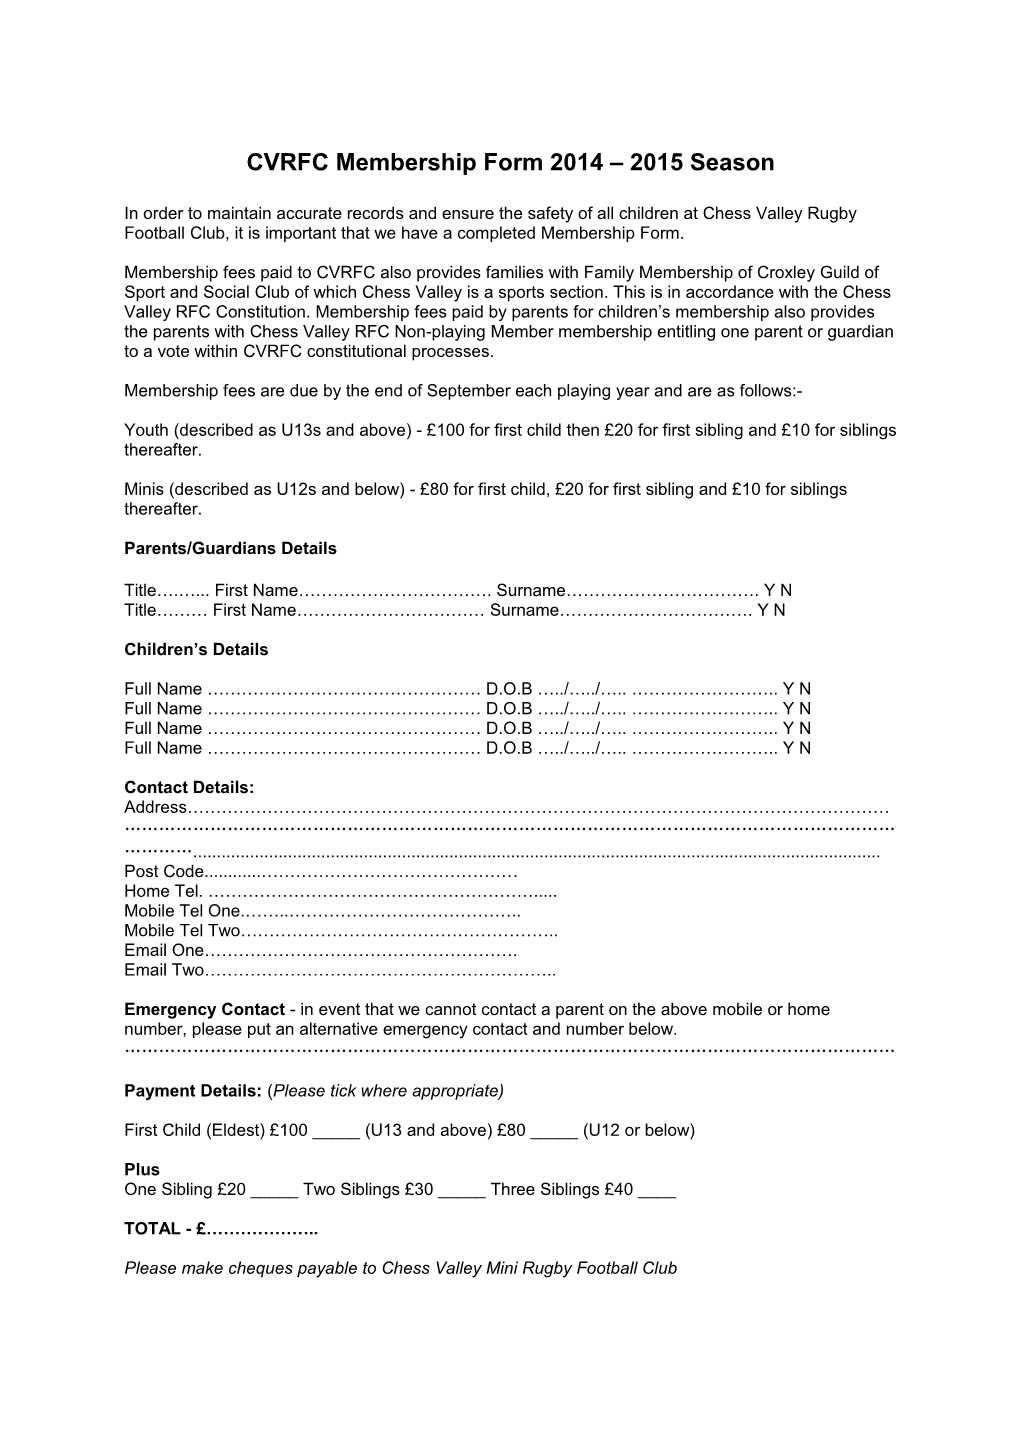 CVRFC Membership Form 2014 2015 Season